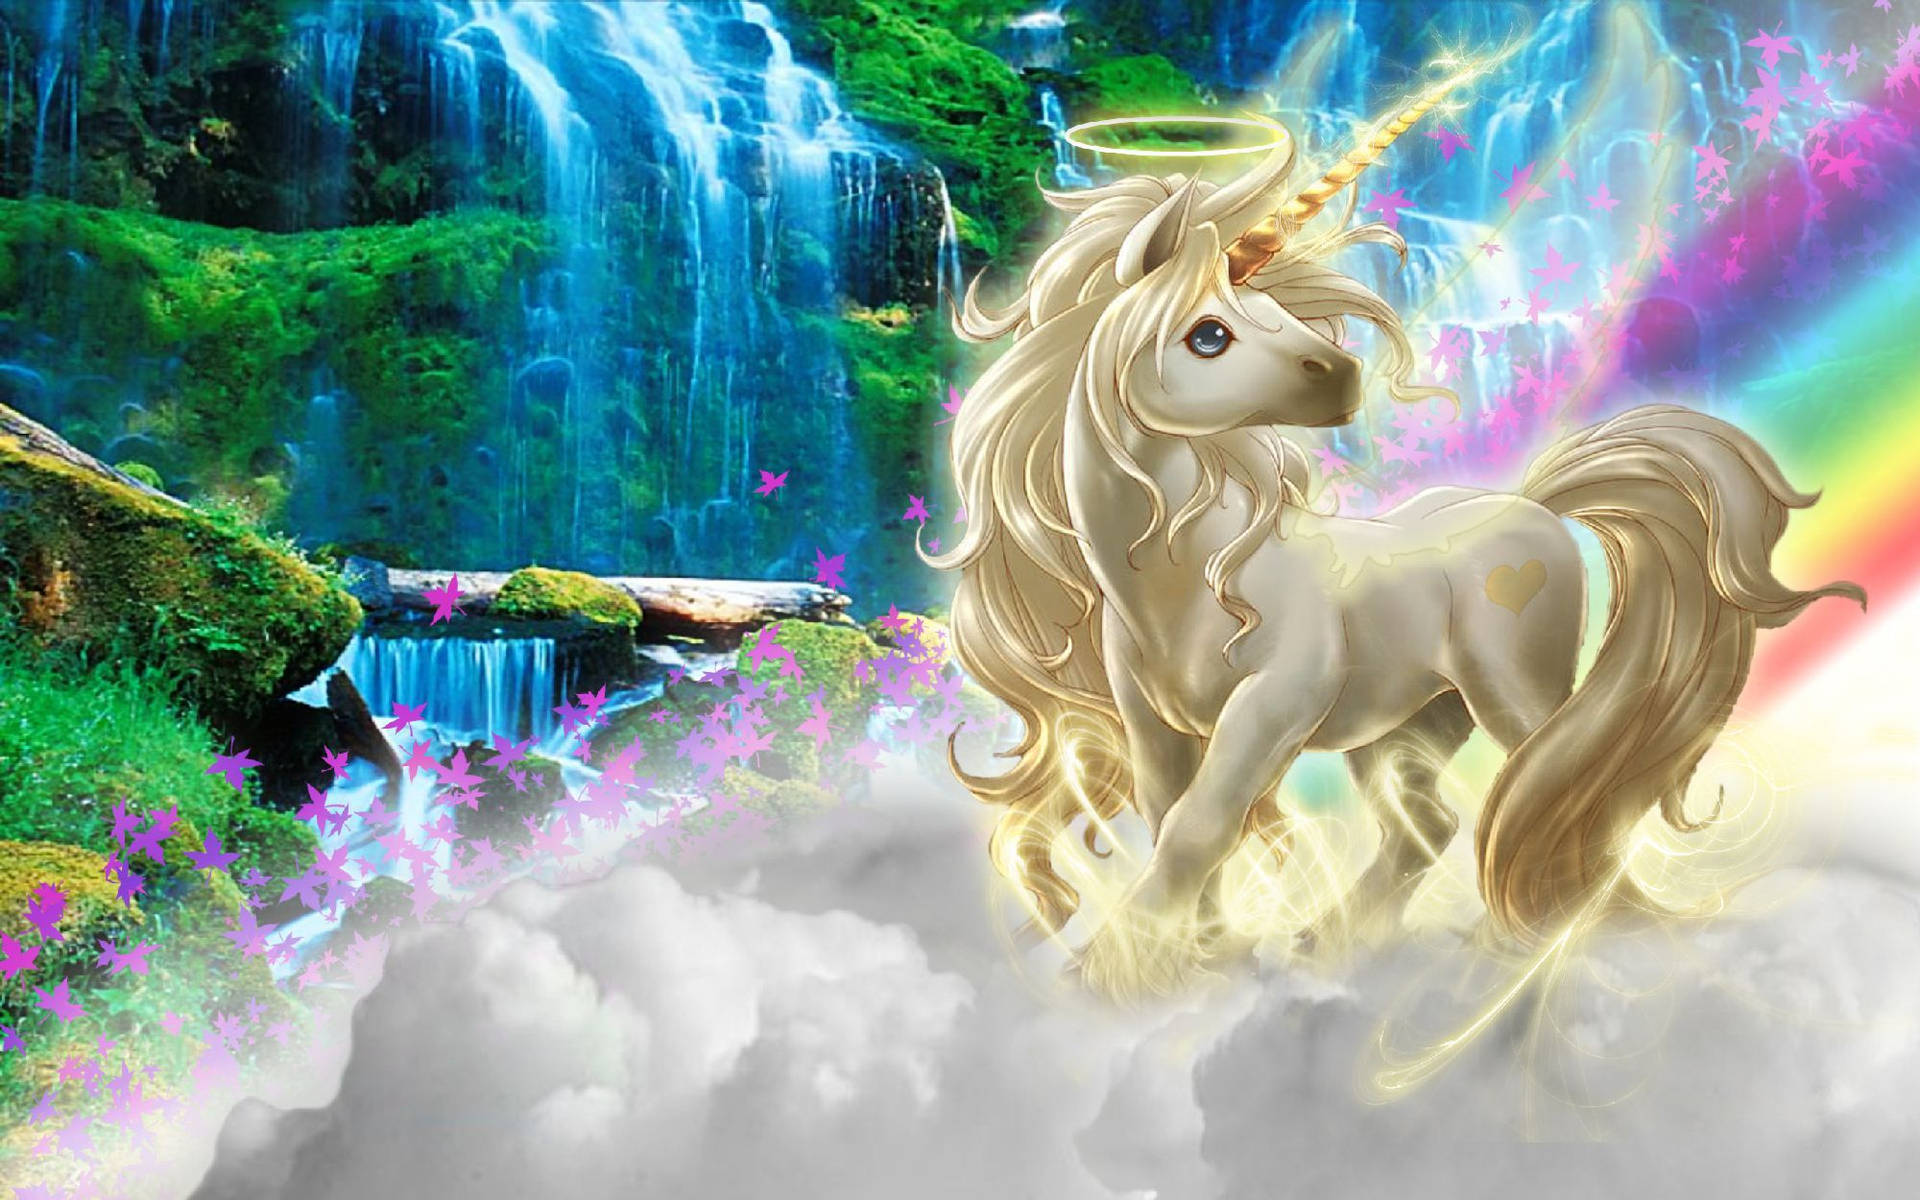 Rainbow Unicorn 2000X1250 Wallpaper and Background Image